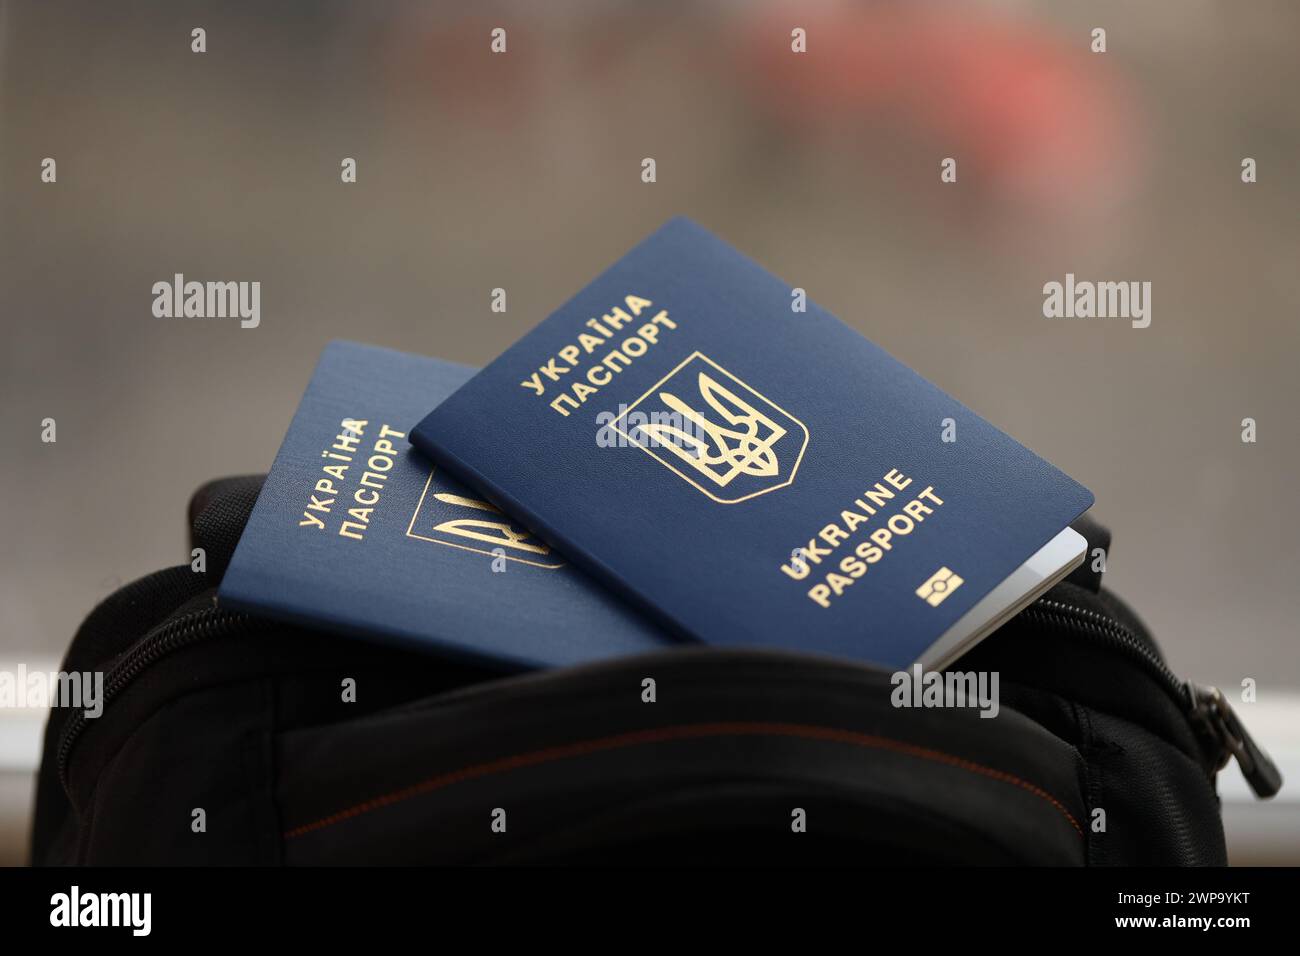 Two ukrainian biometrical passports on black touristic backpack close up Stock Photo